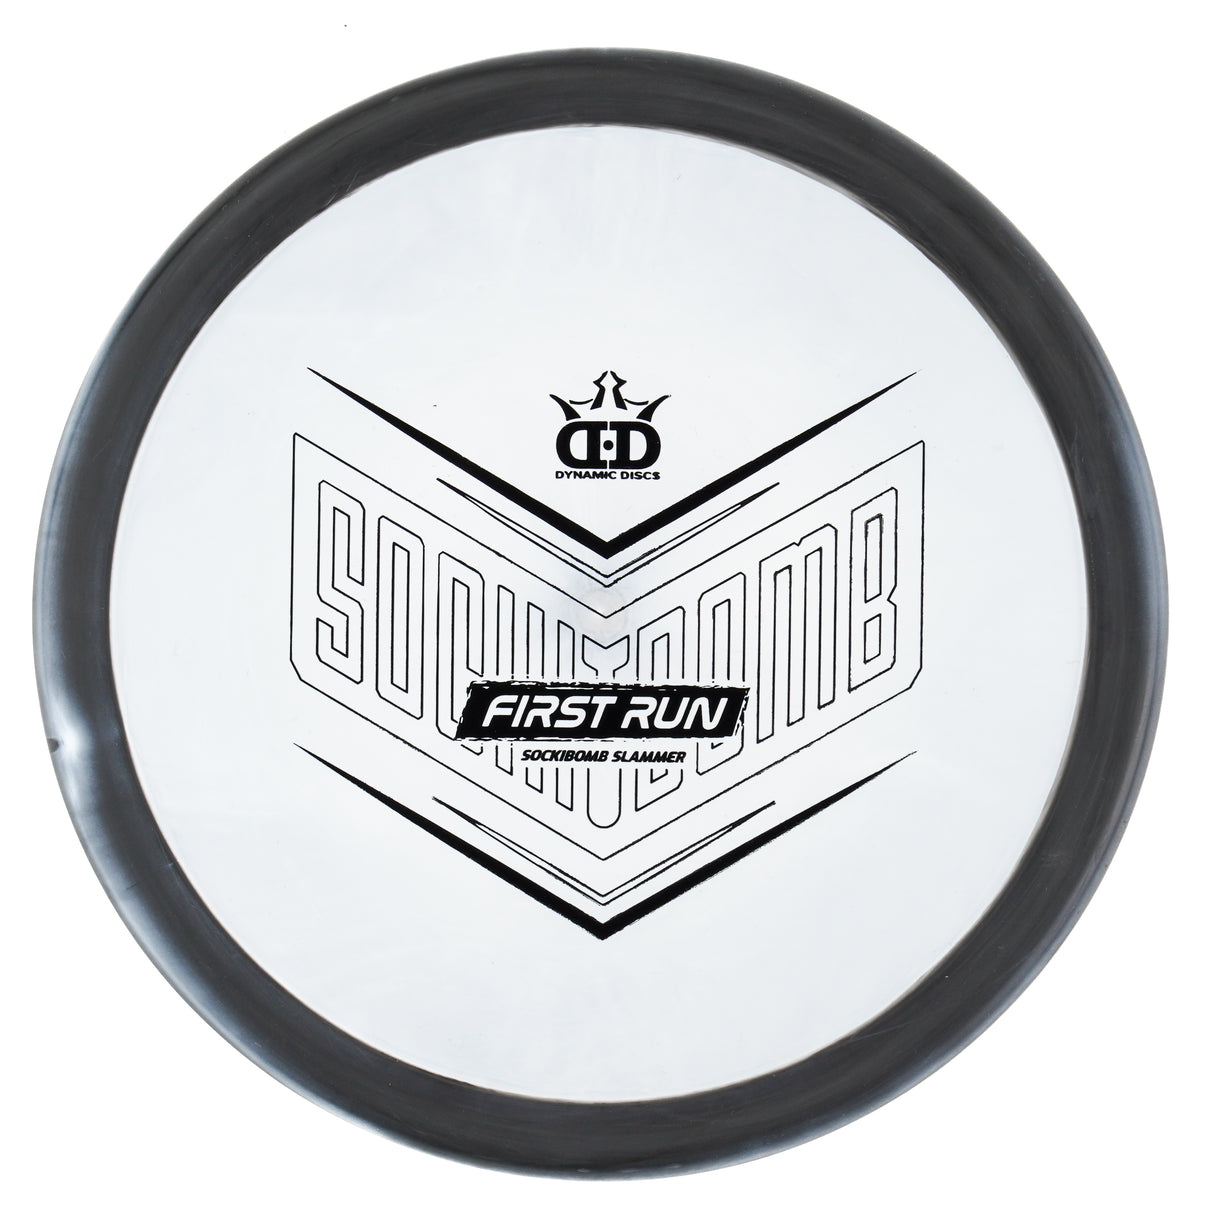 Dynamic Discs Sockibomb Slammer - First Run Classic Supreme Orbit 176g | Style 0001